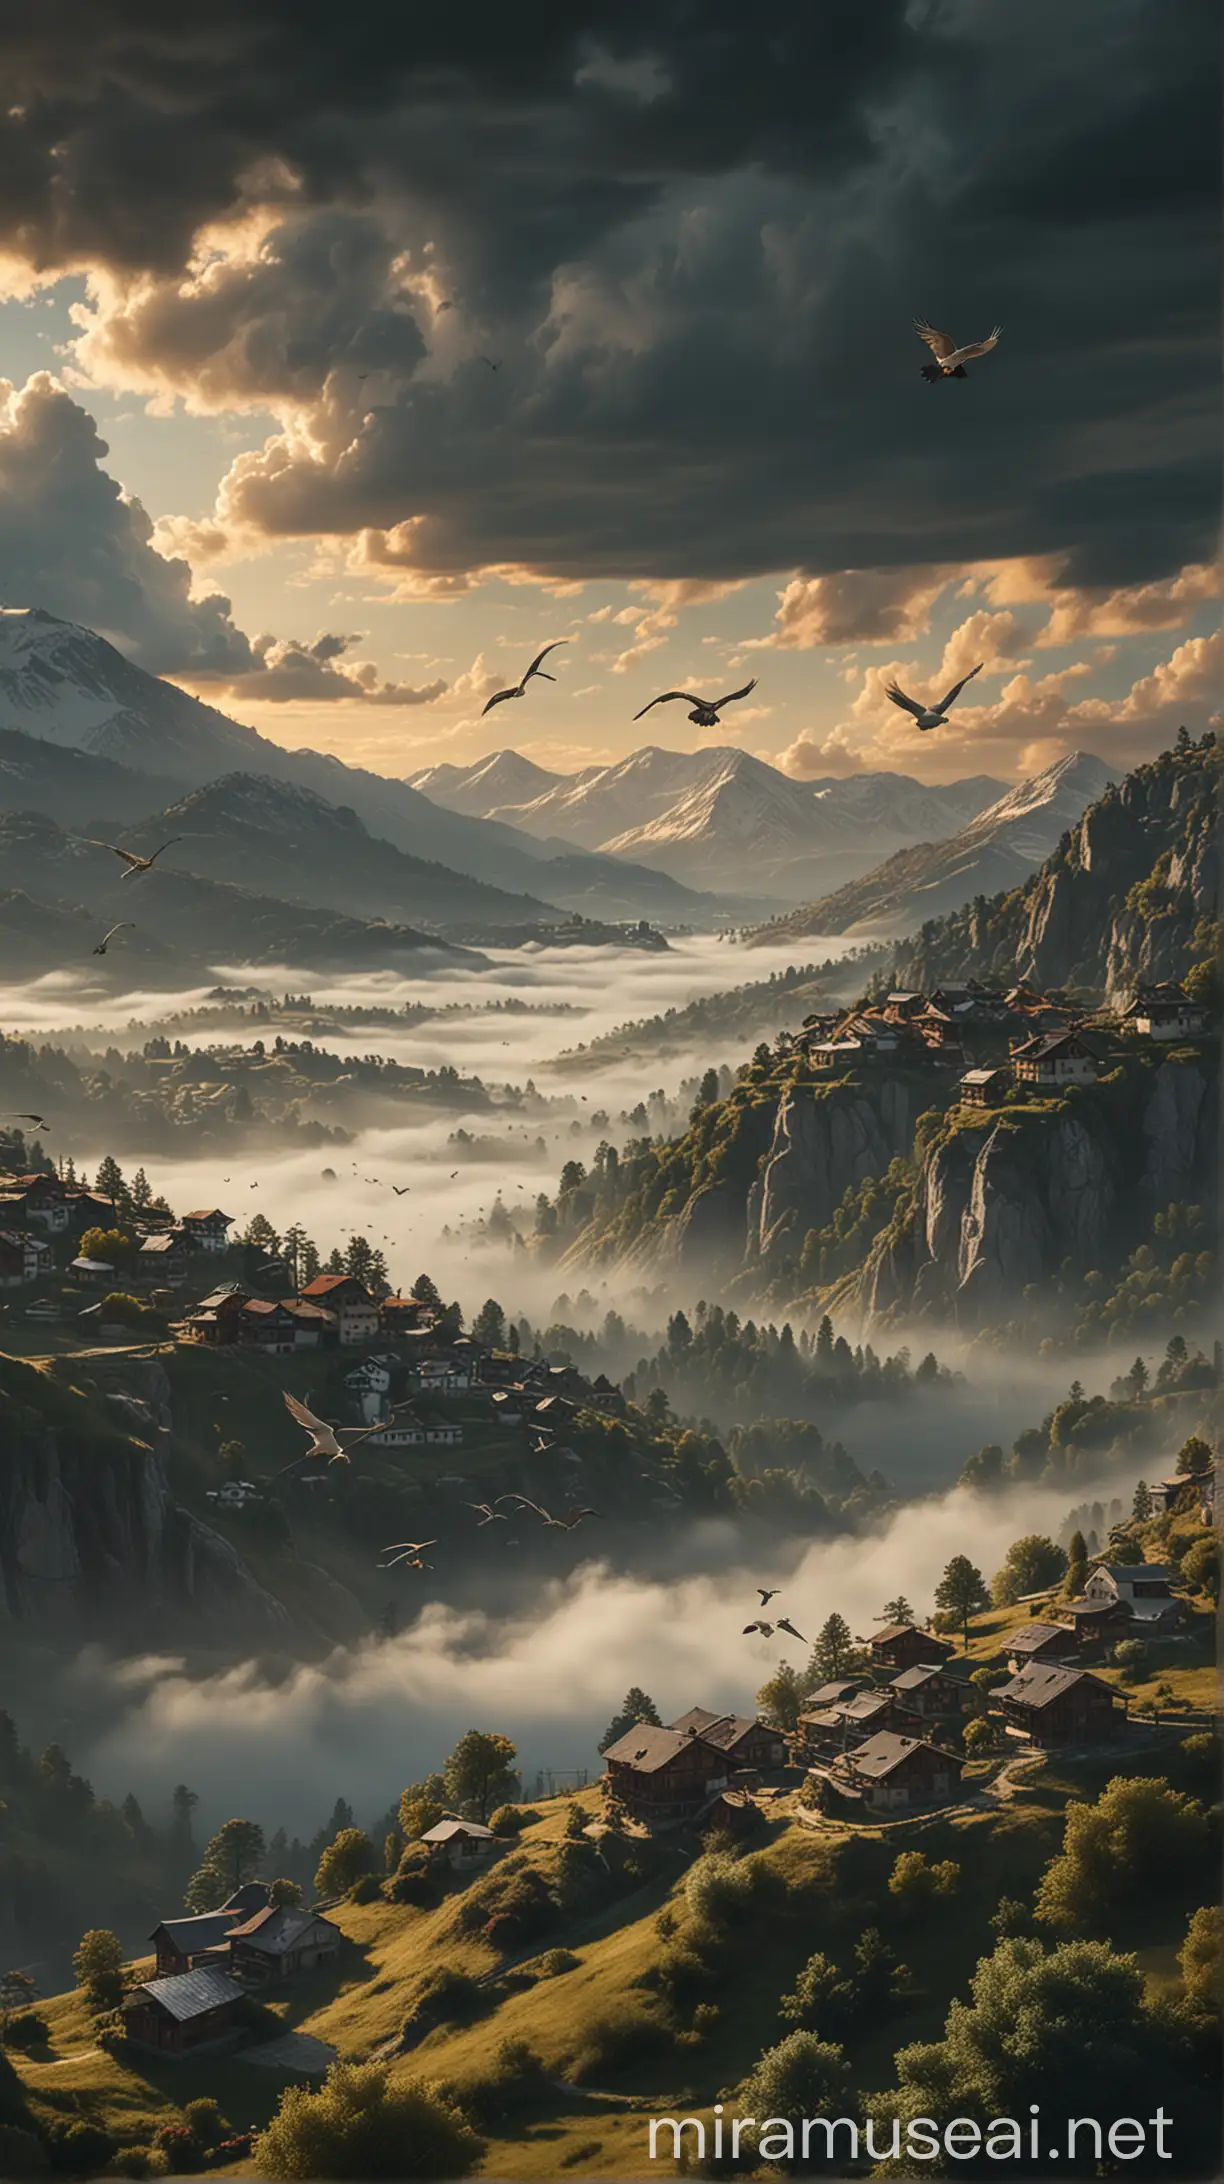 Tranquil Mountain Village Landscape with Soaring Birds CGI 8K Photorealism